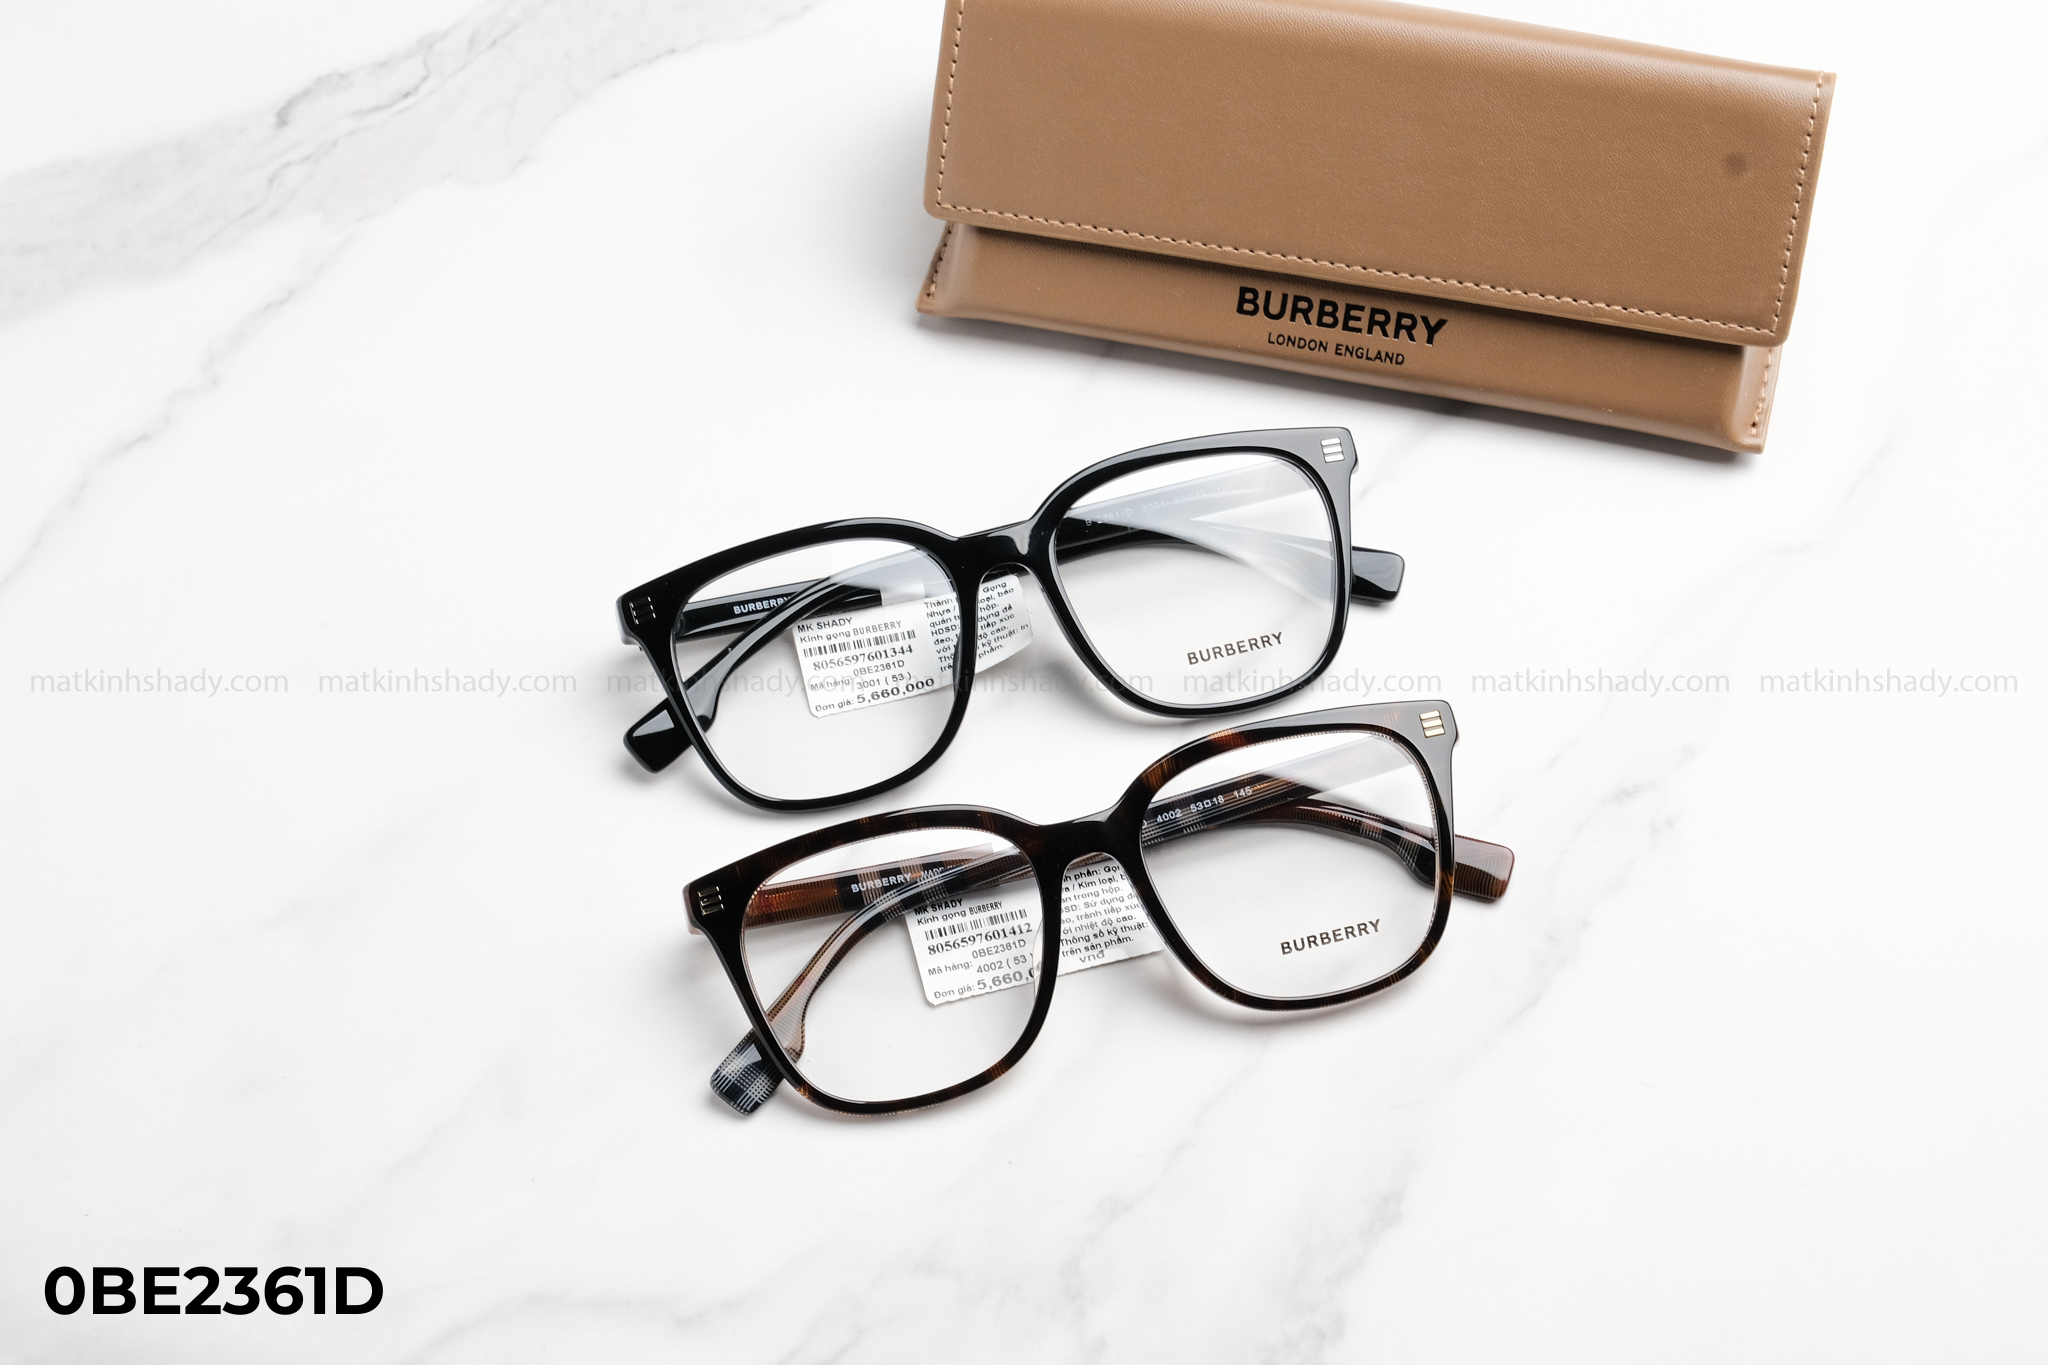  Burberry Eyewear - Glasses - OBE2361D 